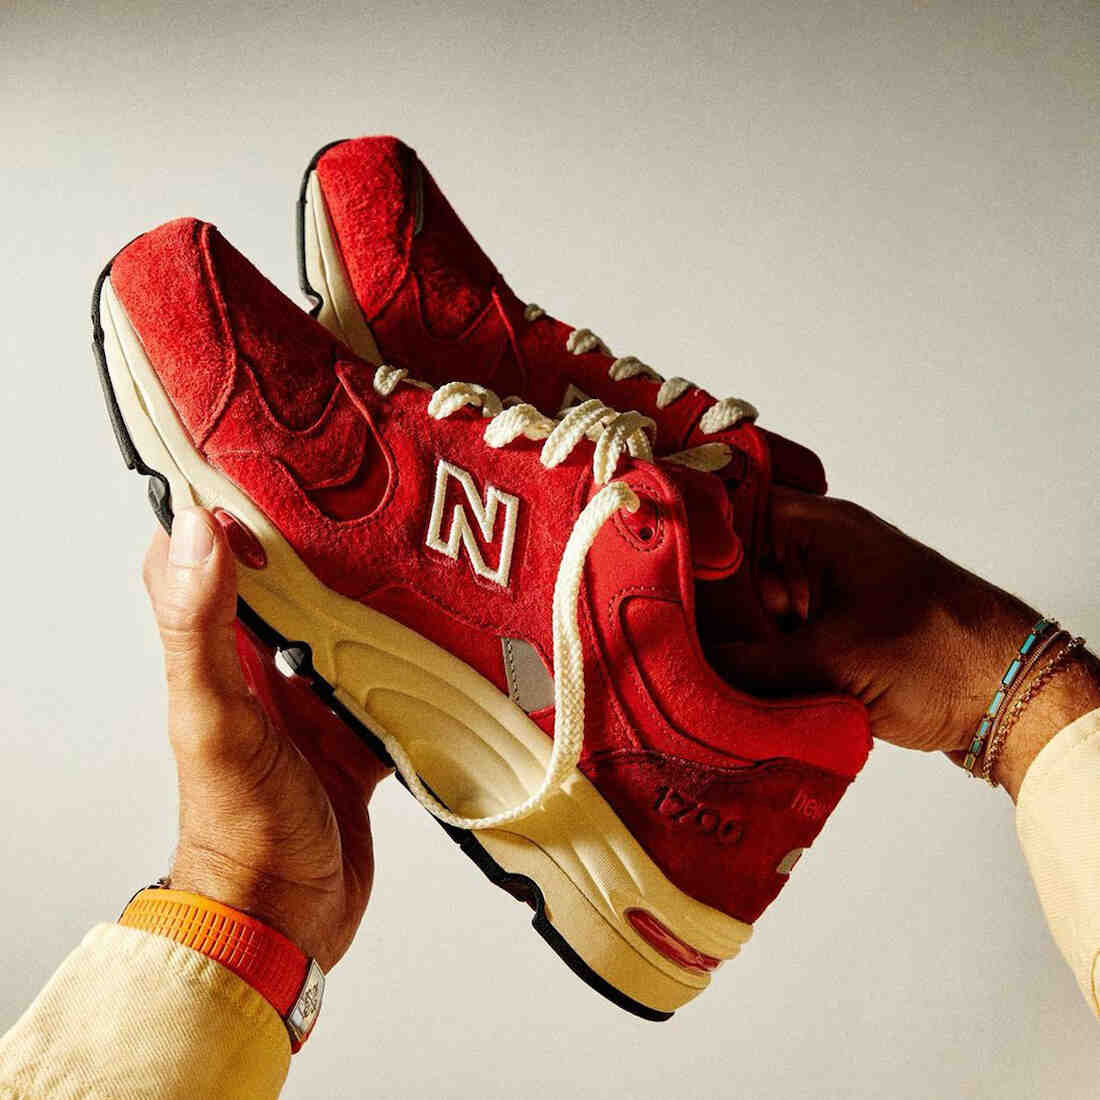 运动鞋, 新百伦, Ronnie Fieg, New Balance 1700, New Balance, KITH